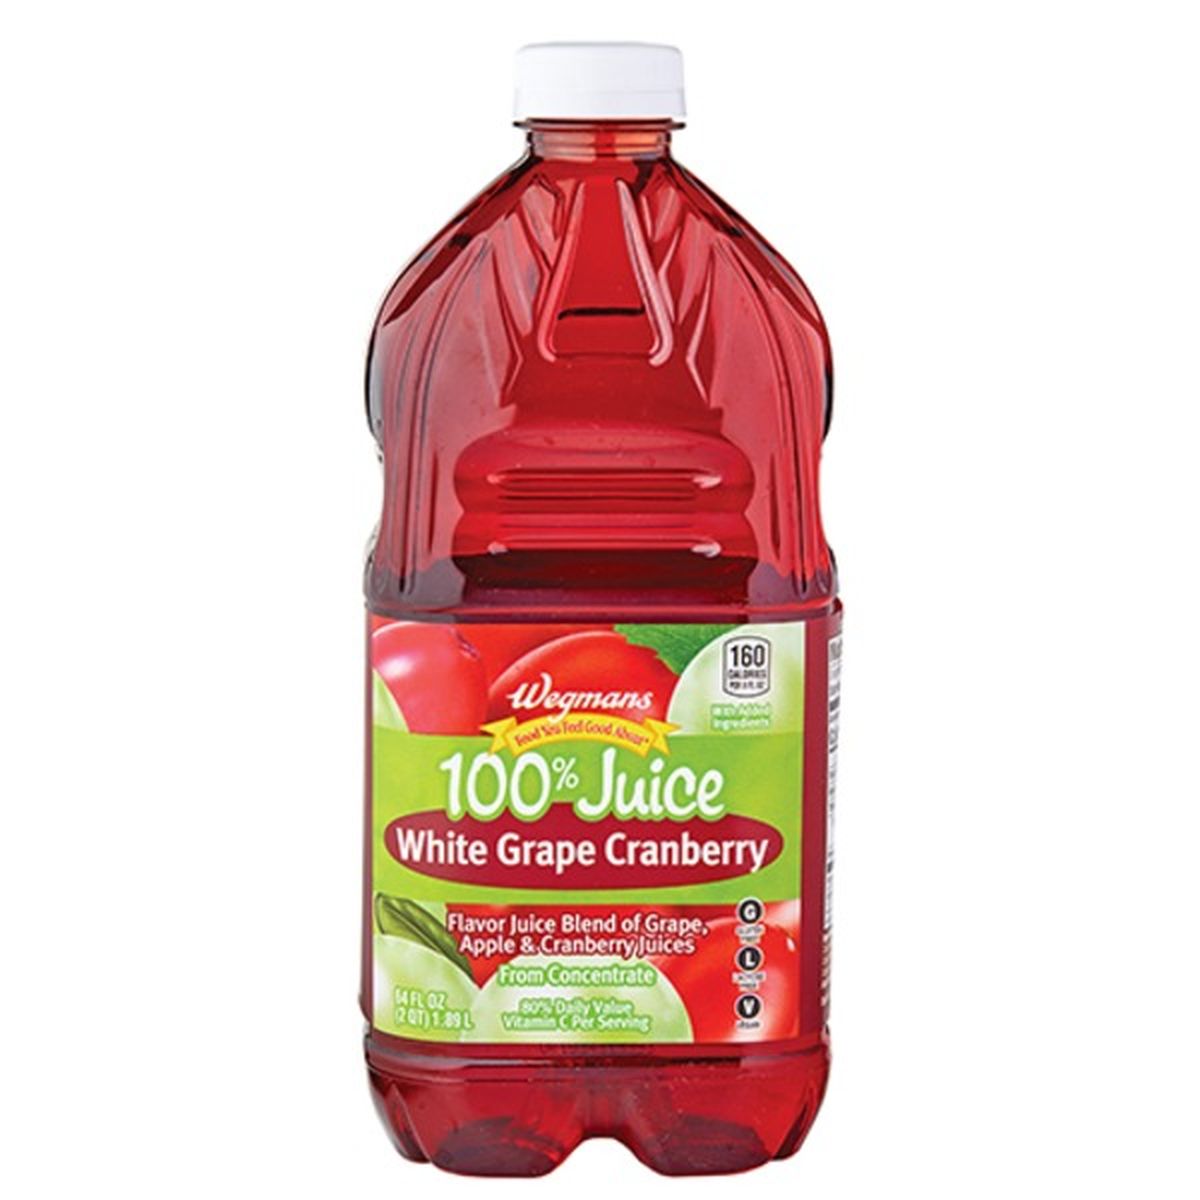 Calories in Wegmans 100% White Grape Cranberry Juice Blend